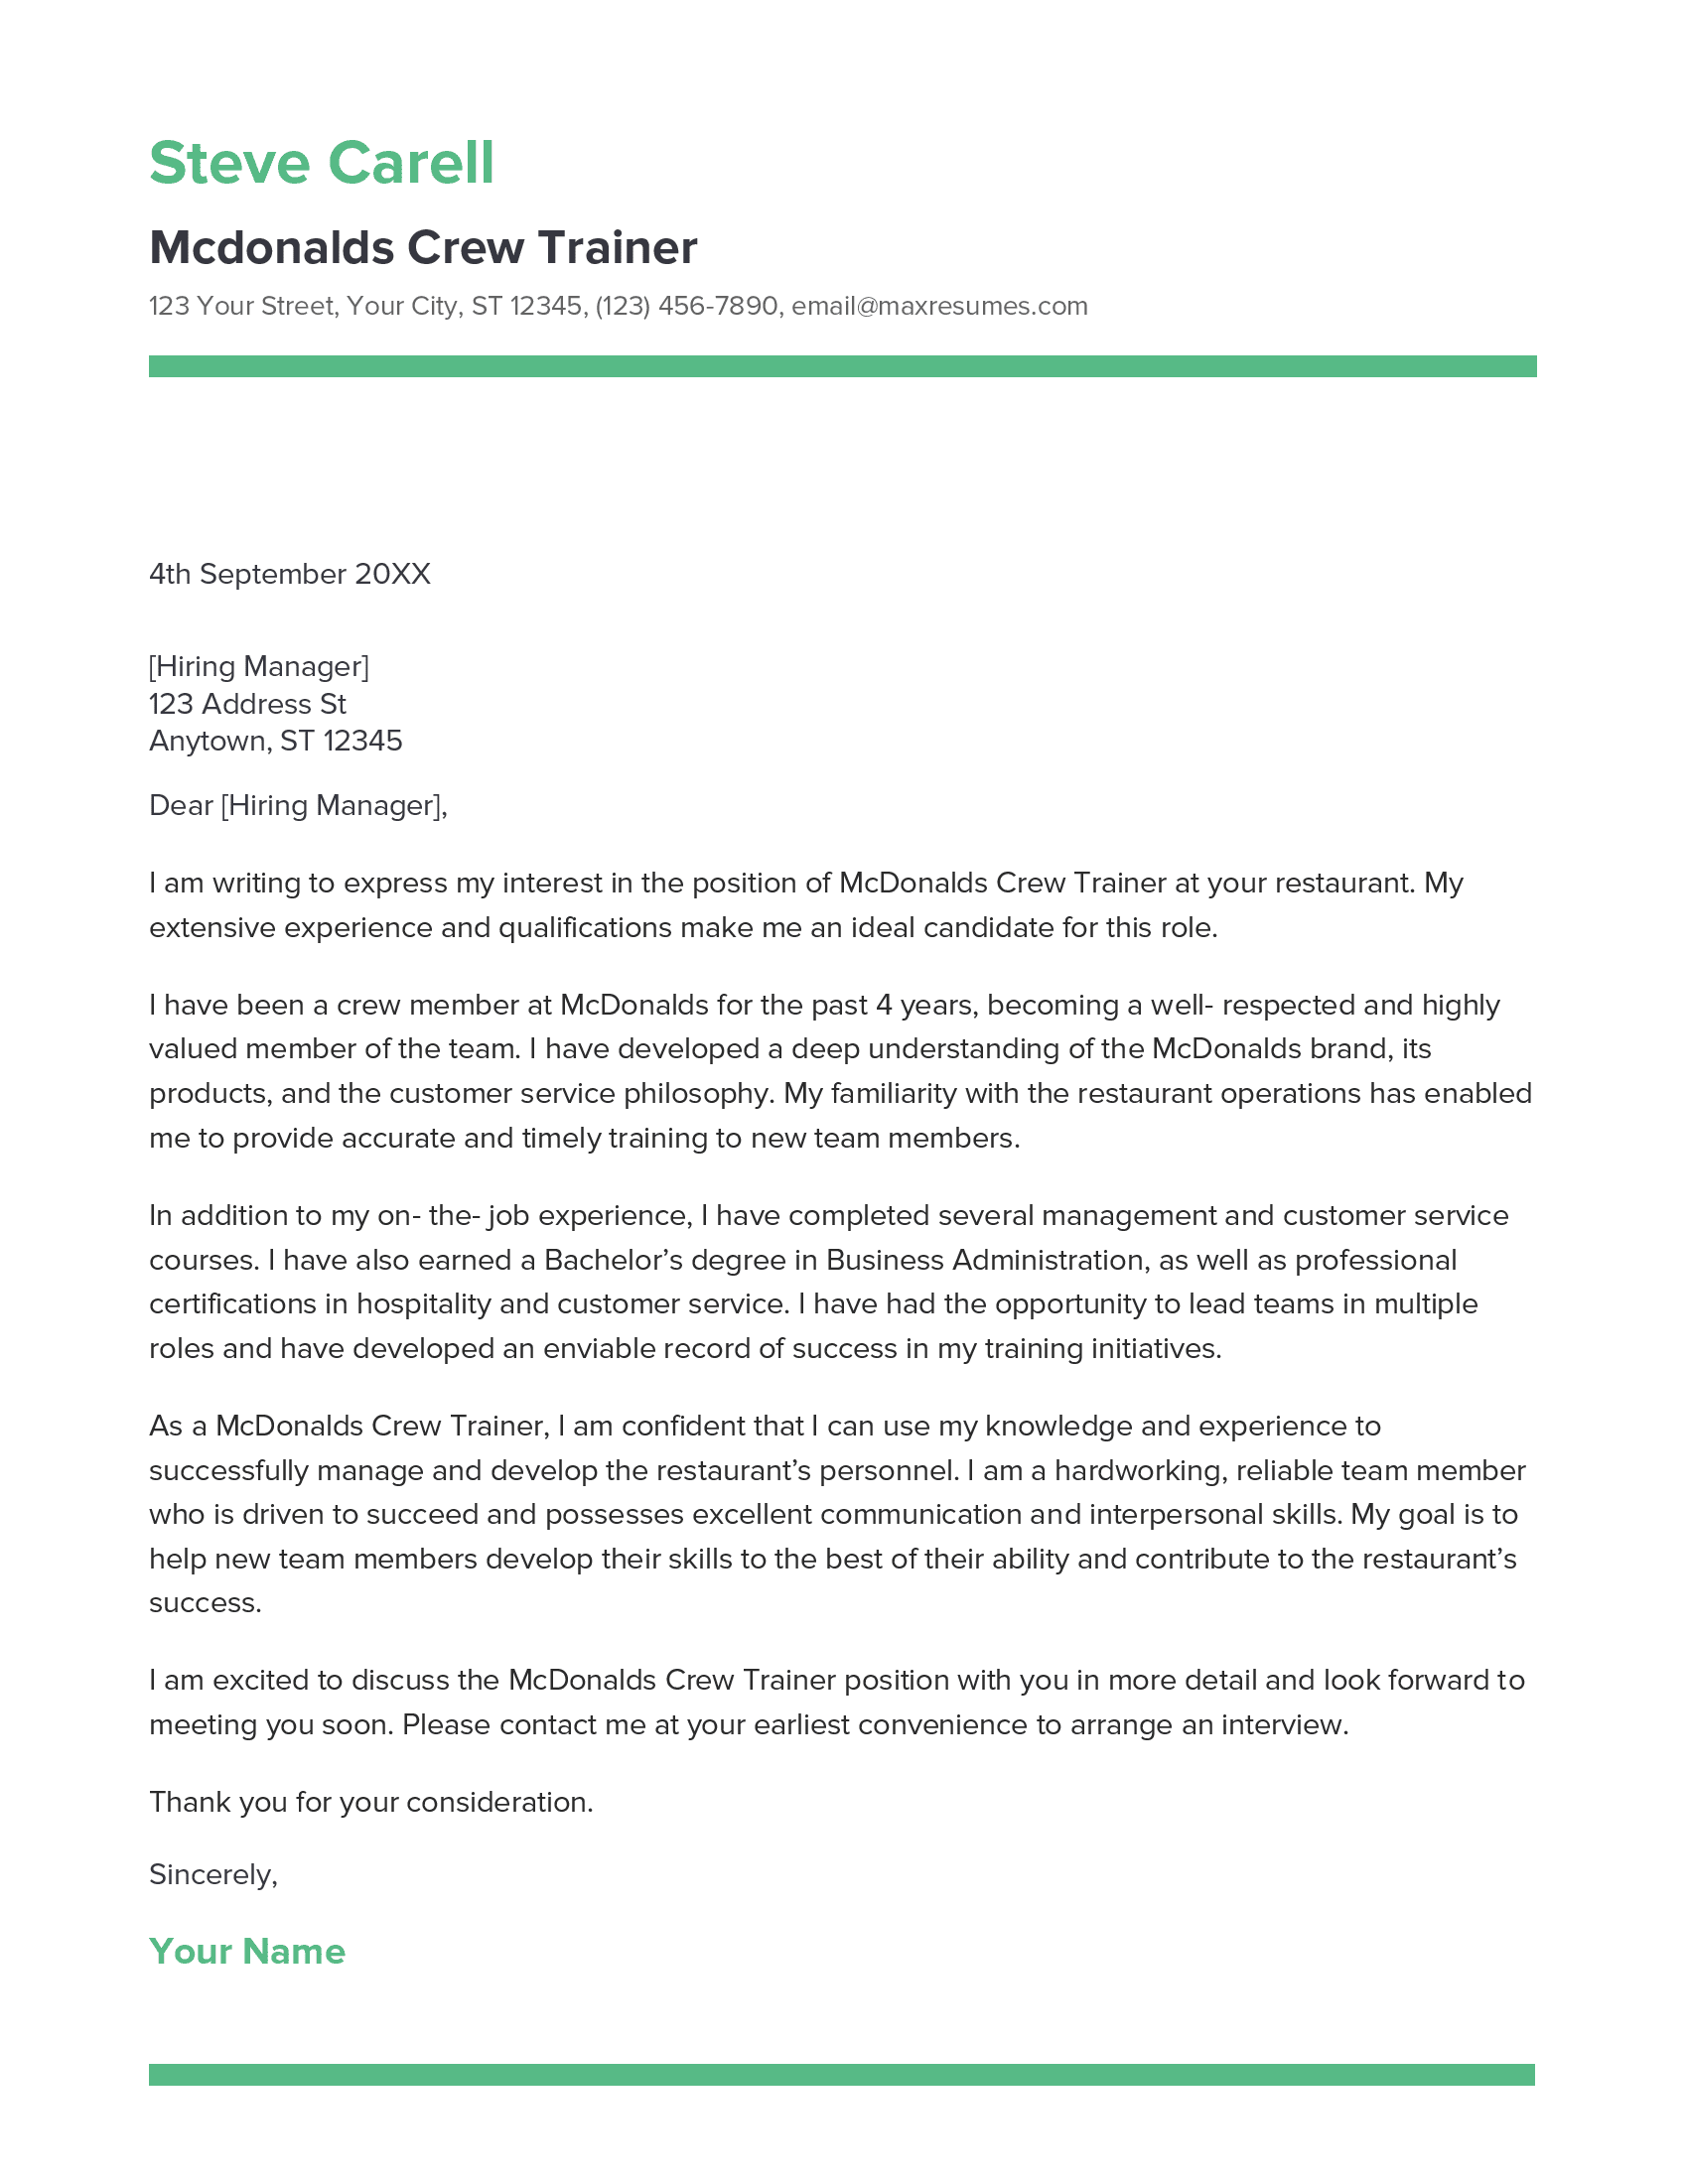 Mcdonalds Crew Trainer Cover Letter Example